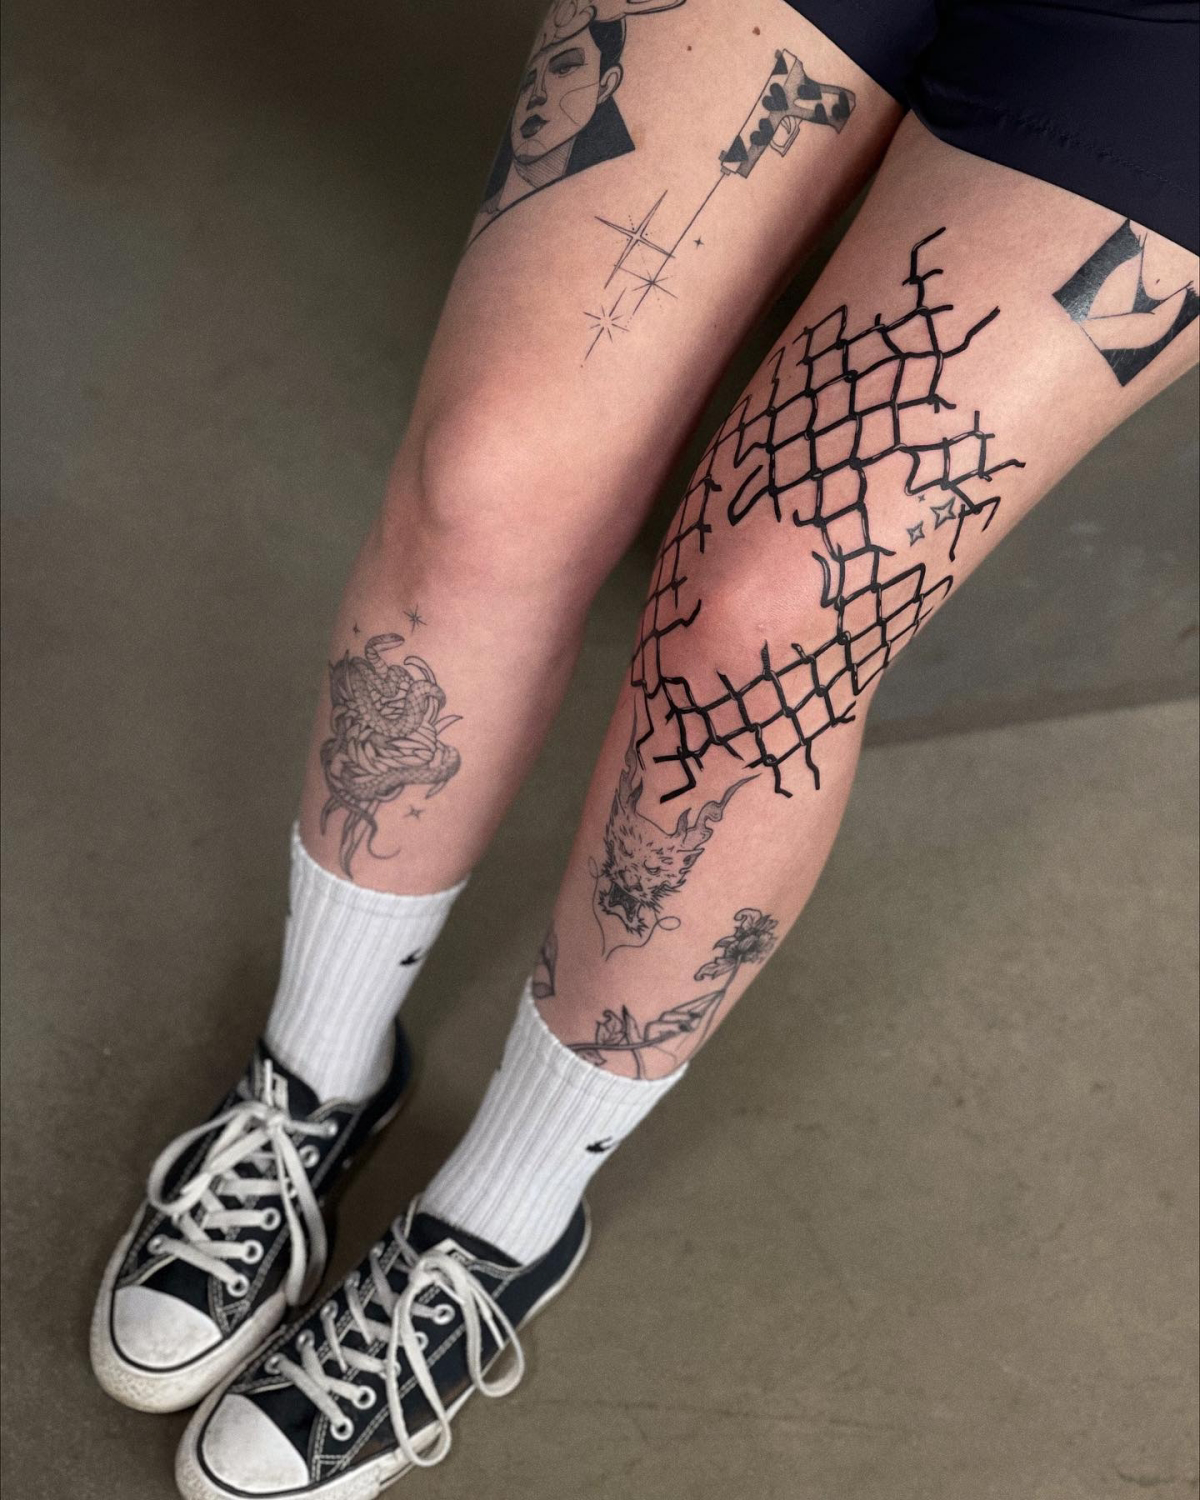 tattoo ideas above knee